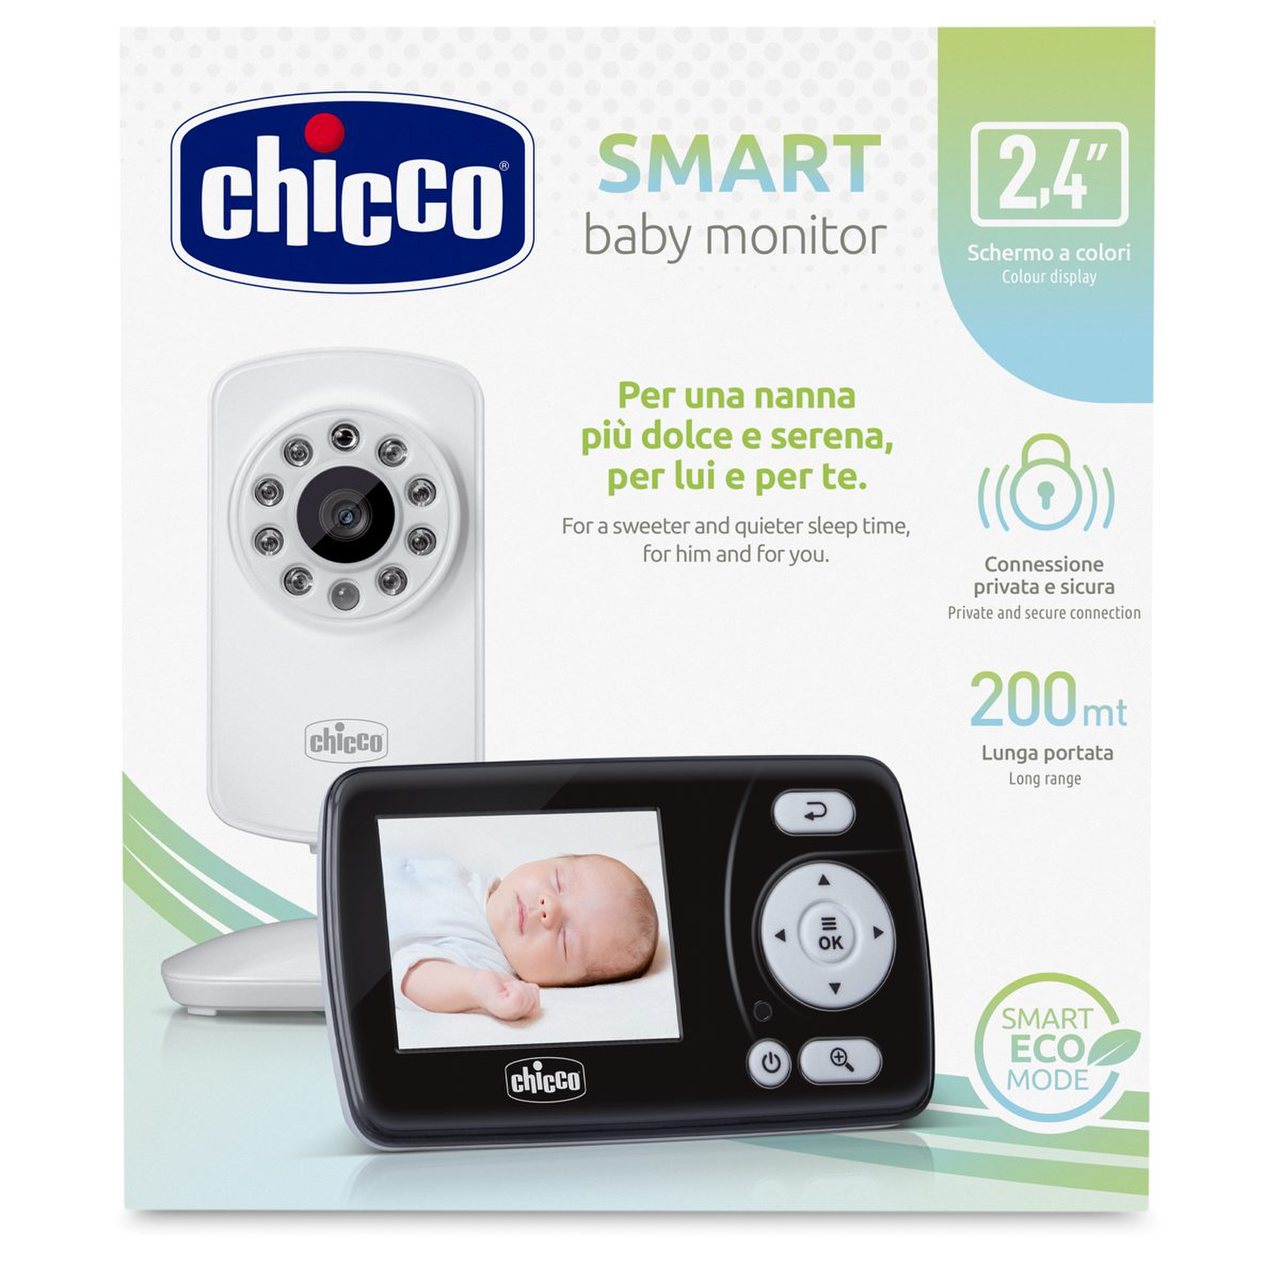 https://moralesbebes.com/wp-content/uploads/2022/05/Vigilabebes-video-Baby-Monitor-Smart-c_Chicco.jpg